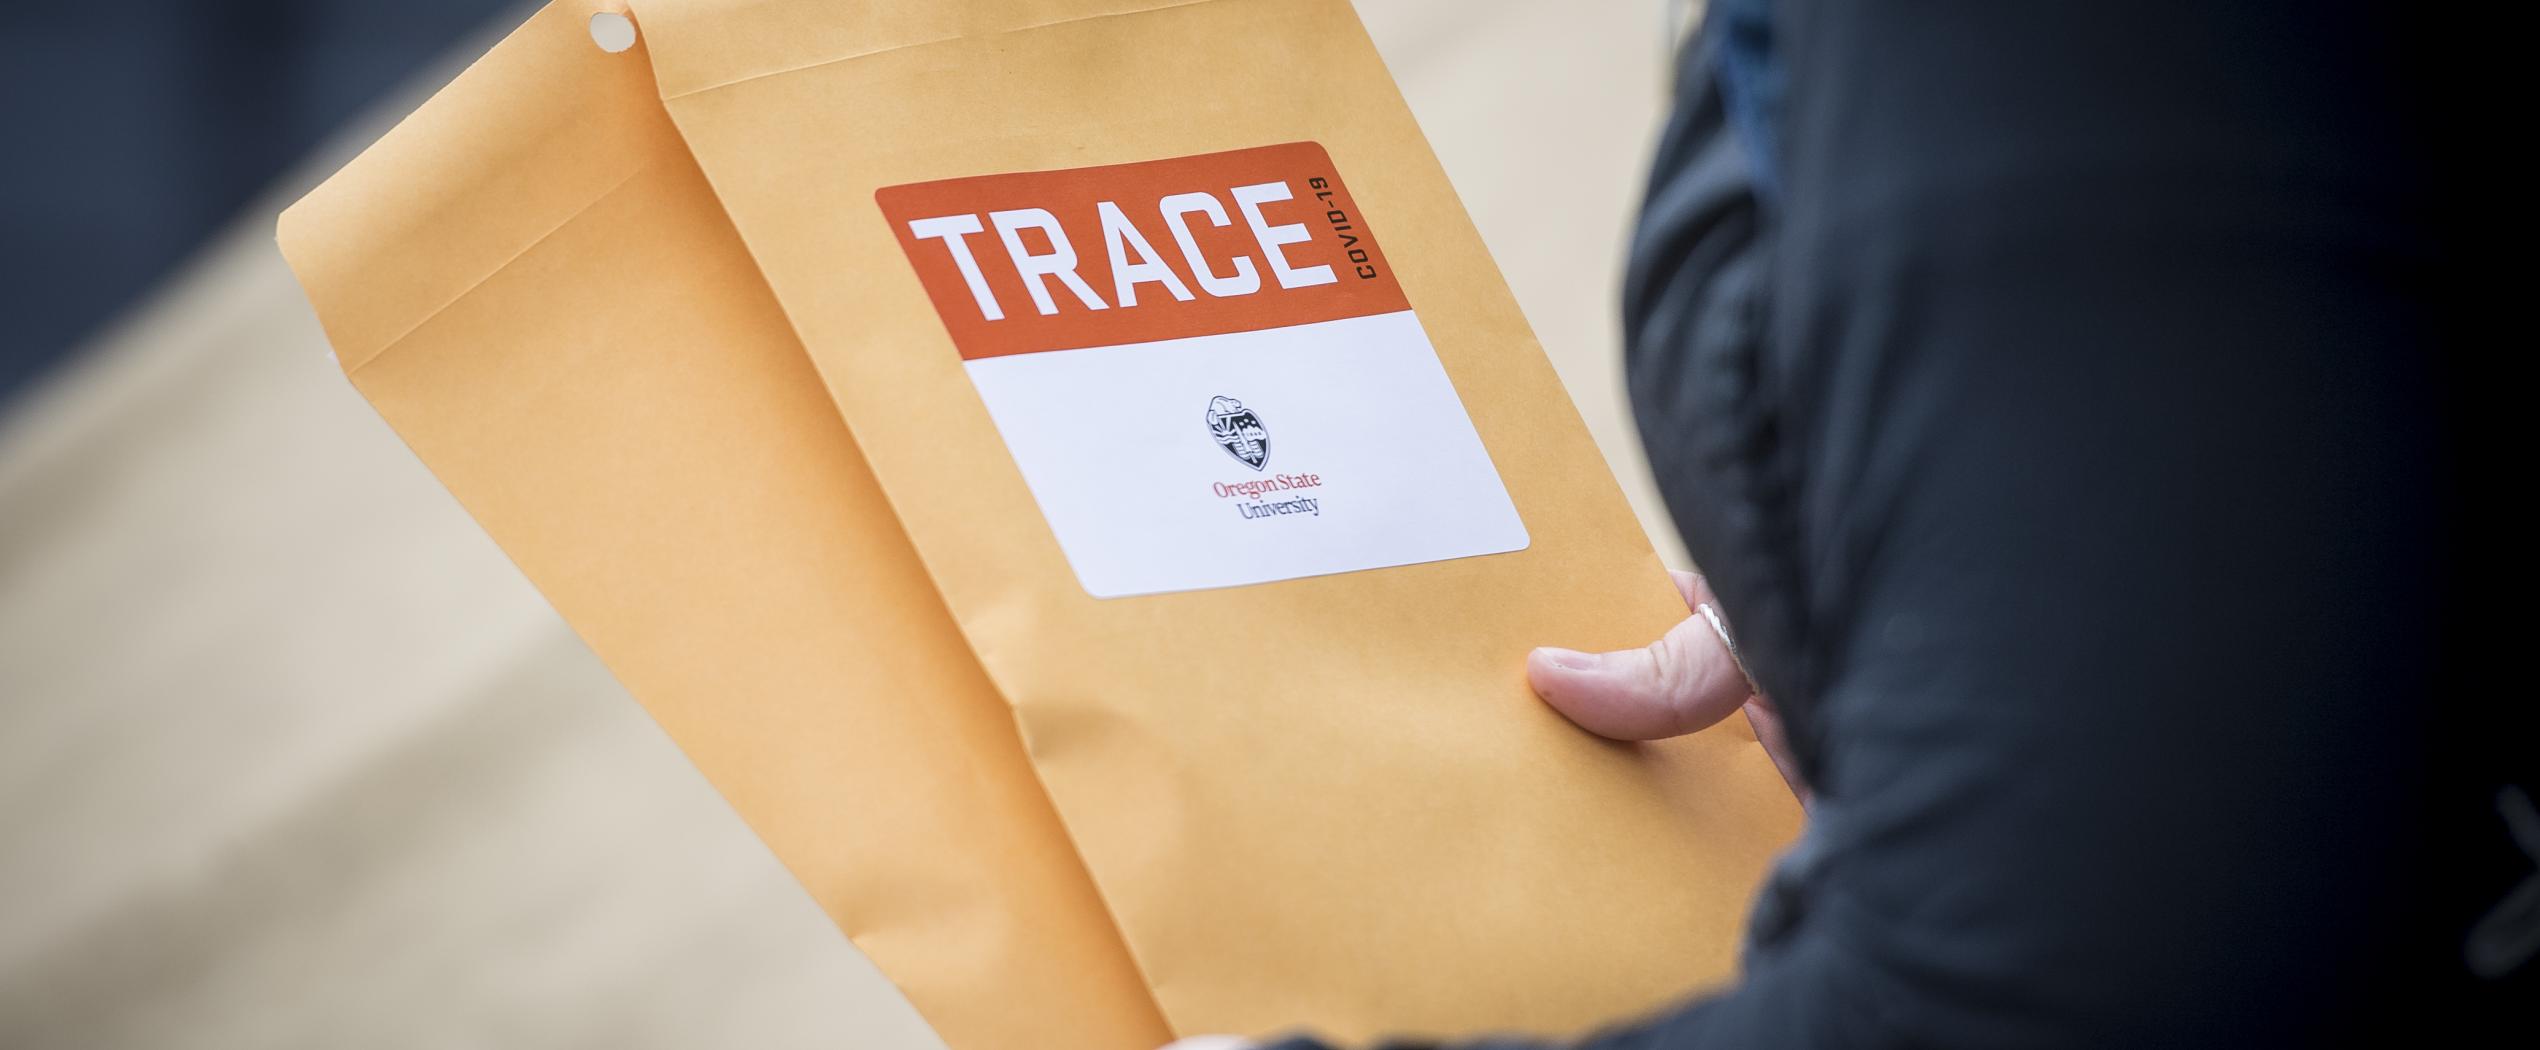 A TRACE volunteer holds envelopes